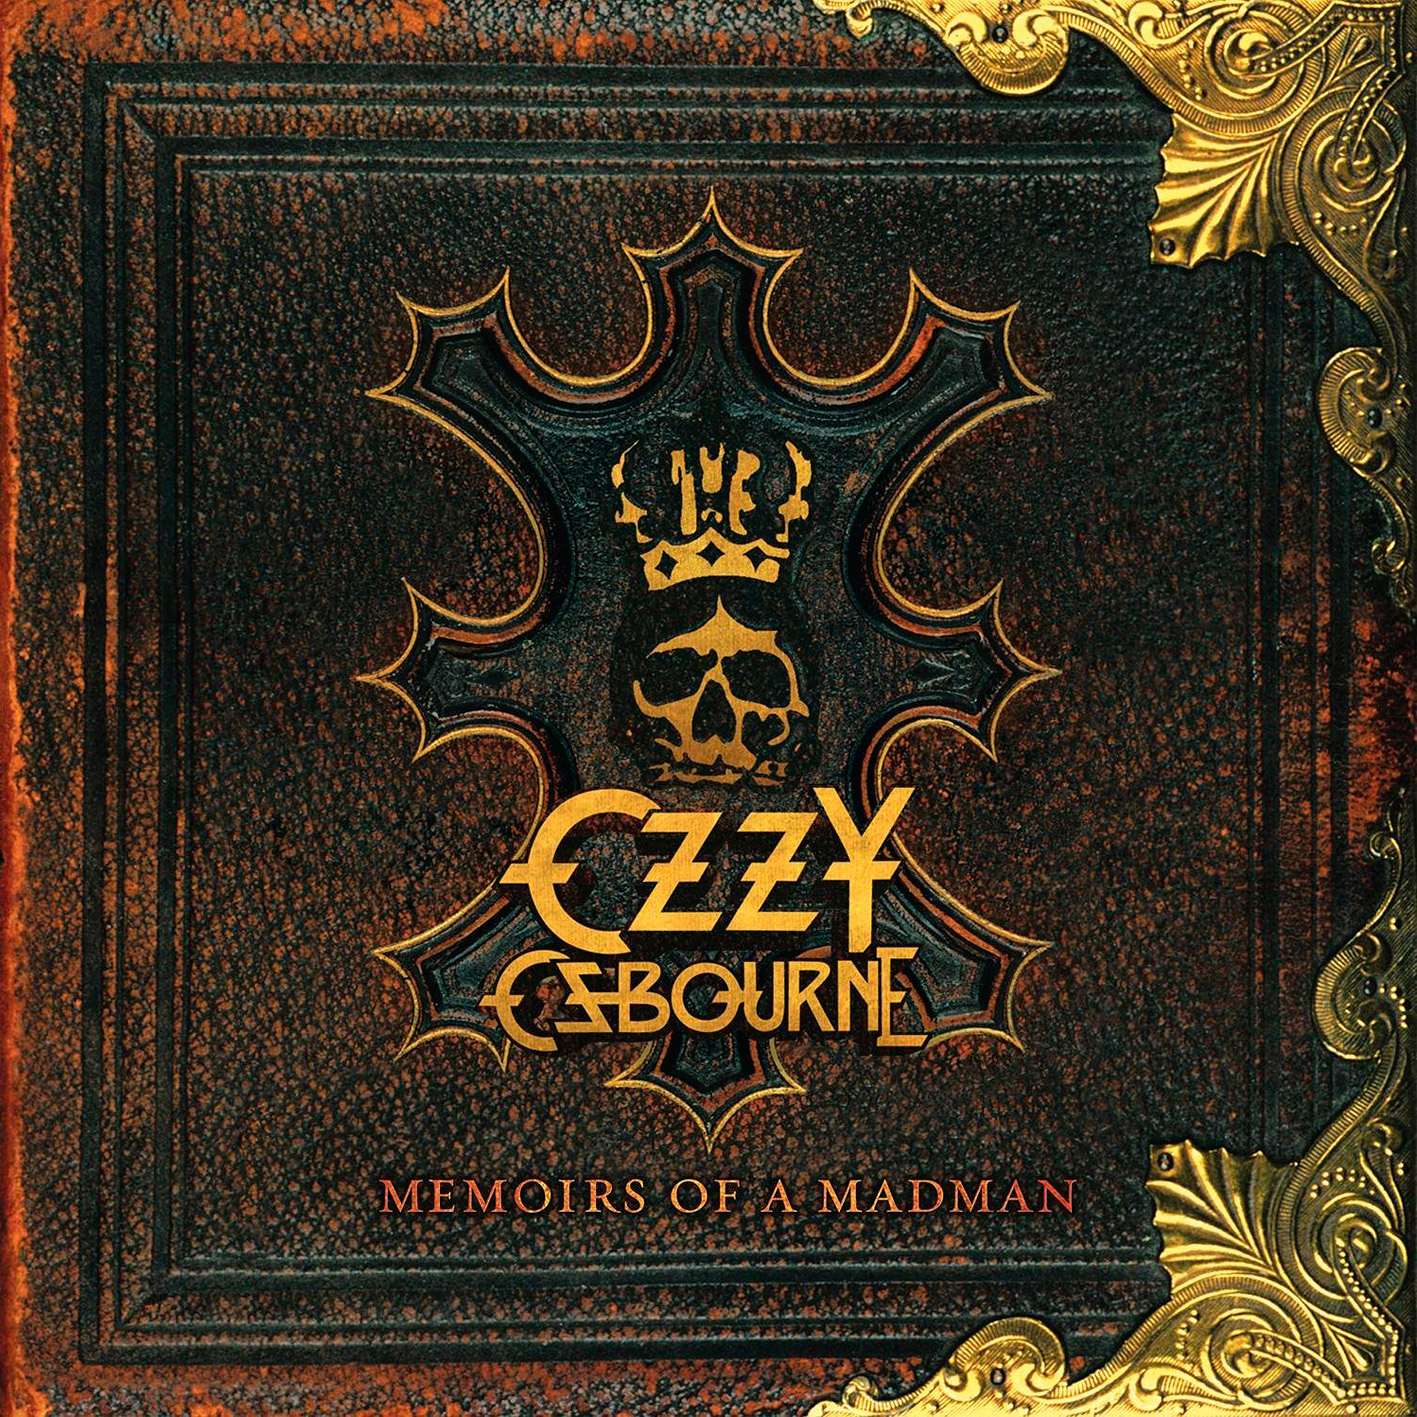 Ozzy Osbourne - Memoirs Of A Madman (2014) [HDTracks FLAC 24bit/96kHz]